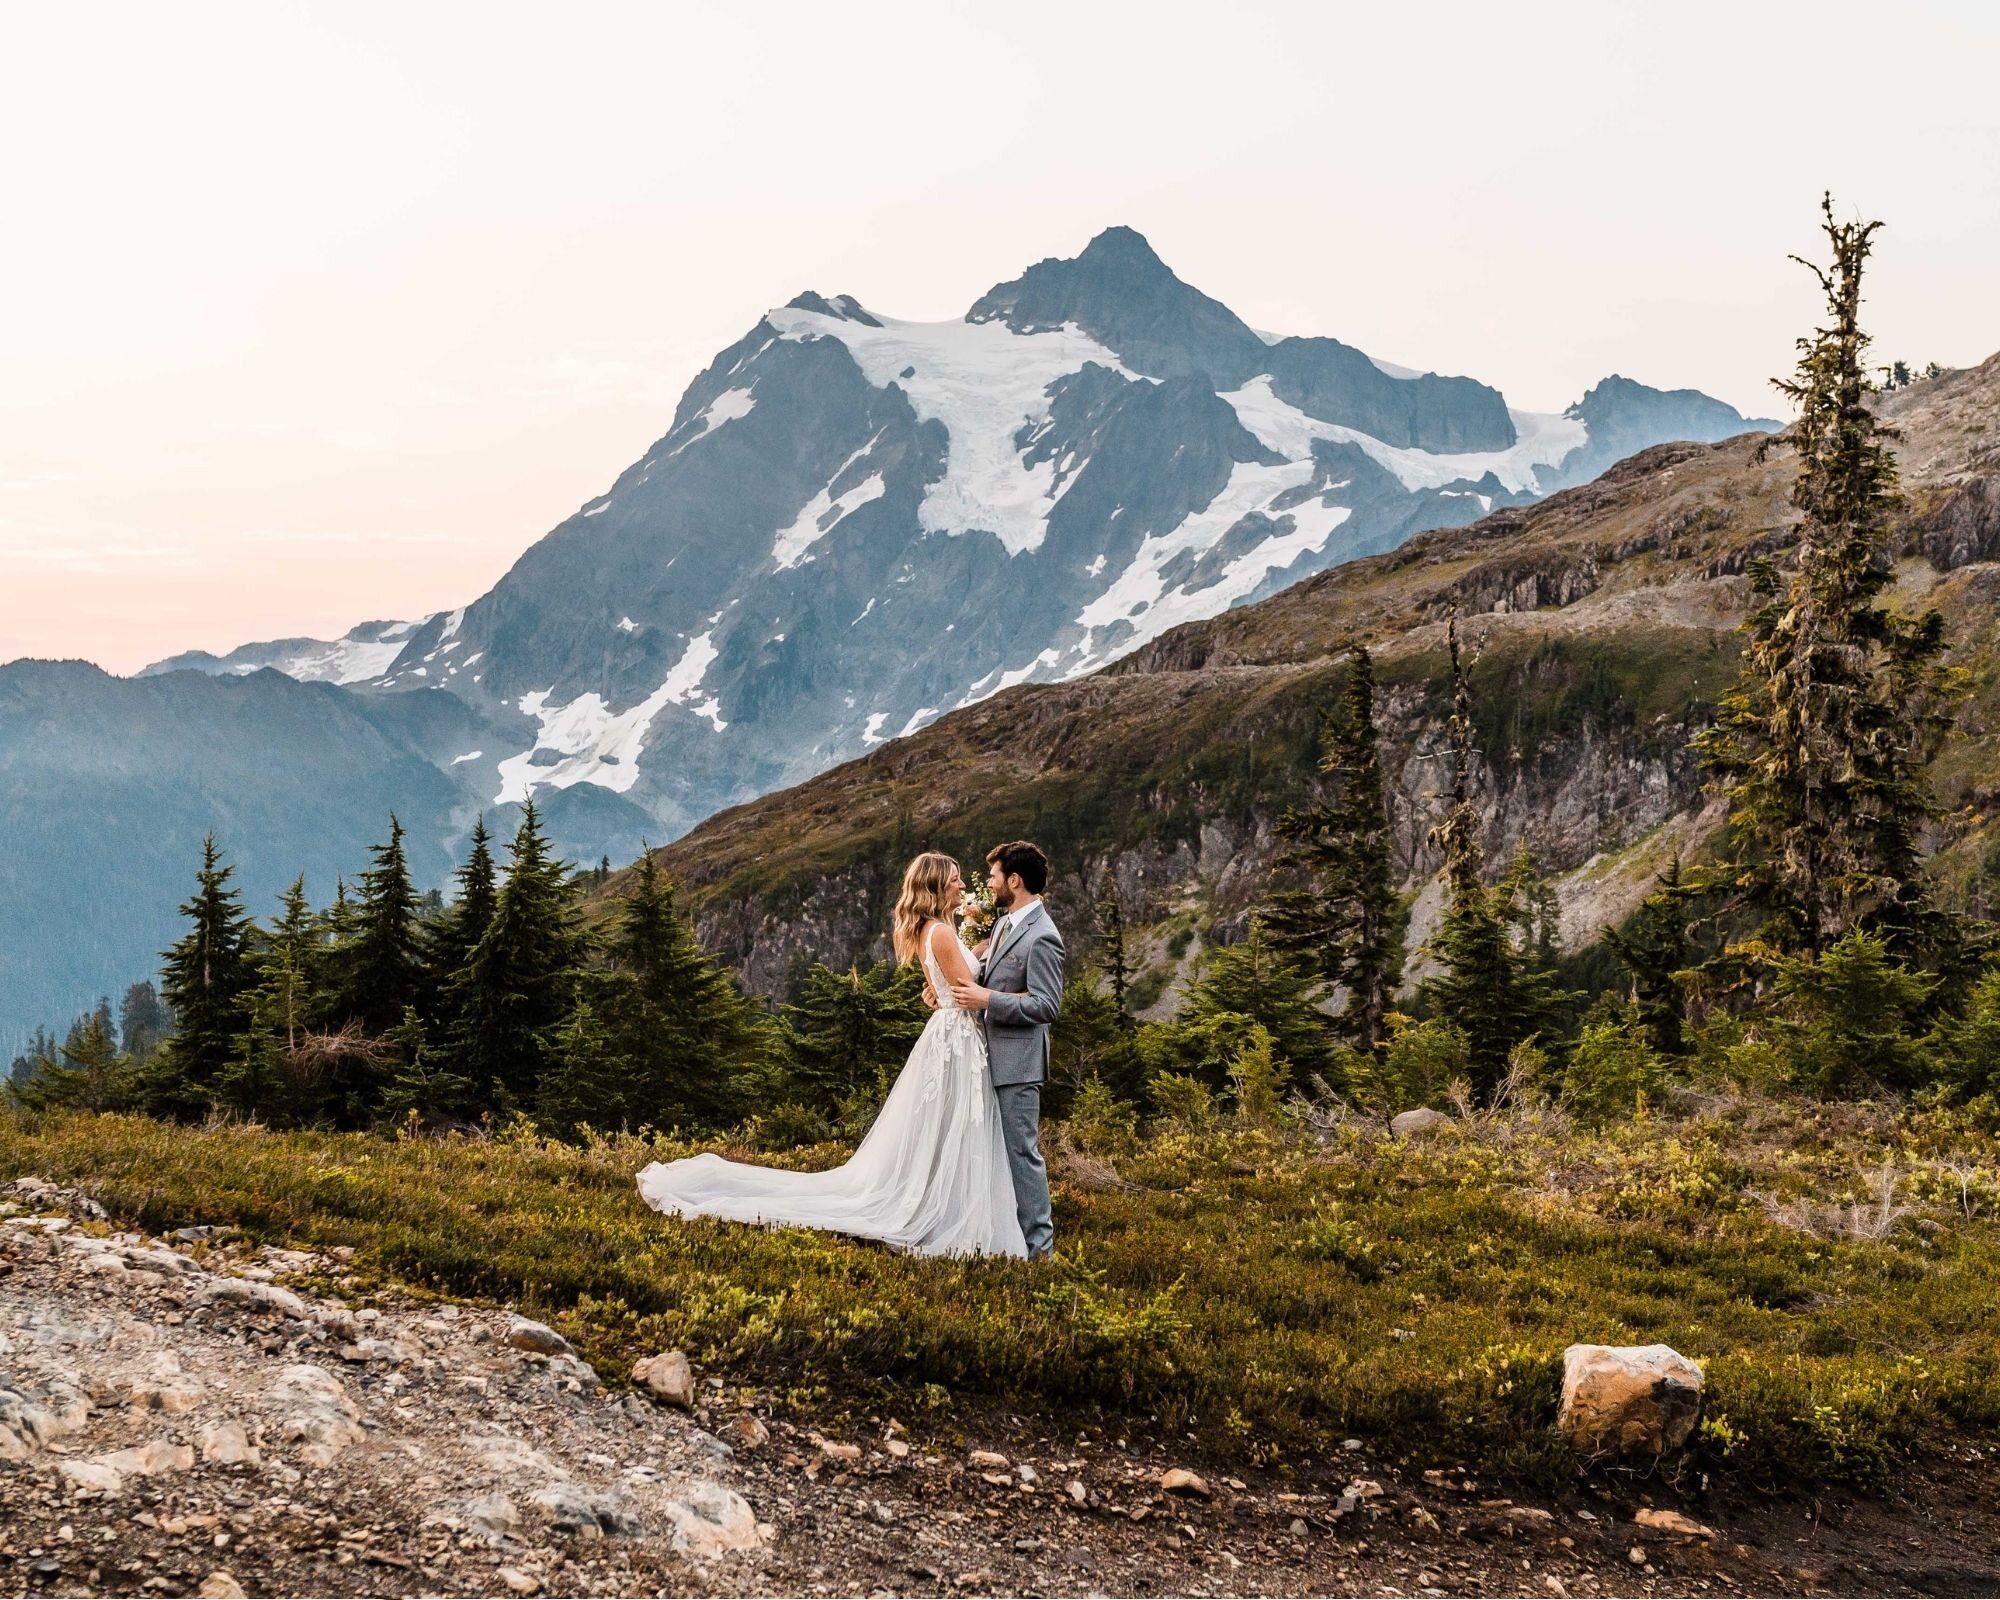 National Park Wedding Venue | Between the Pine Adventure Elopement Photography